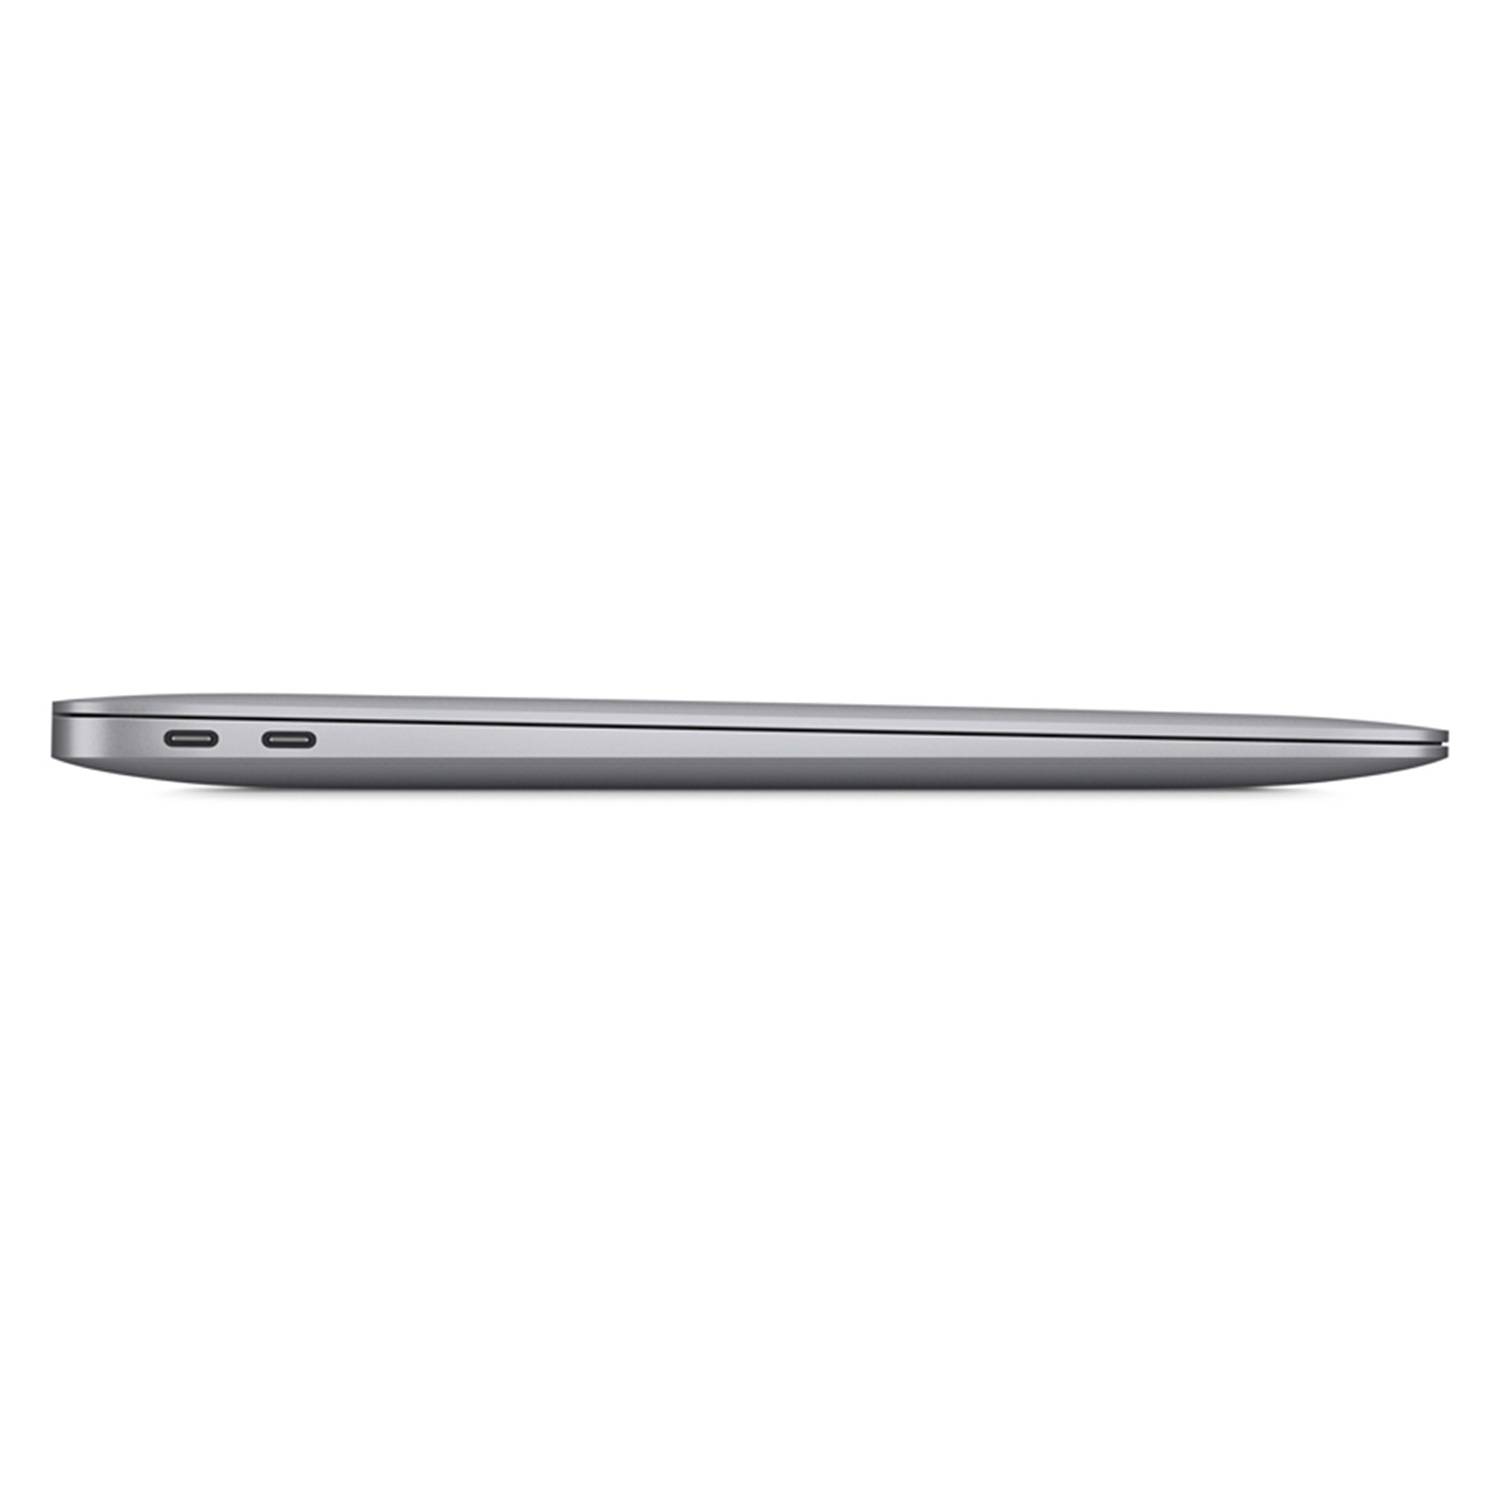 Comparar precios: MacBook Air M1 8GB RAM 256GB SSD 13.3